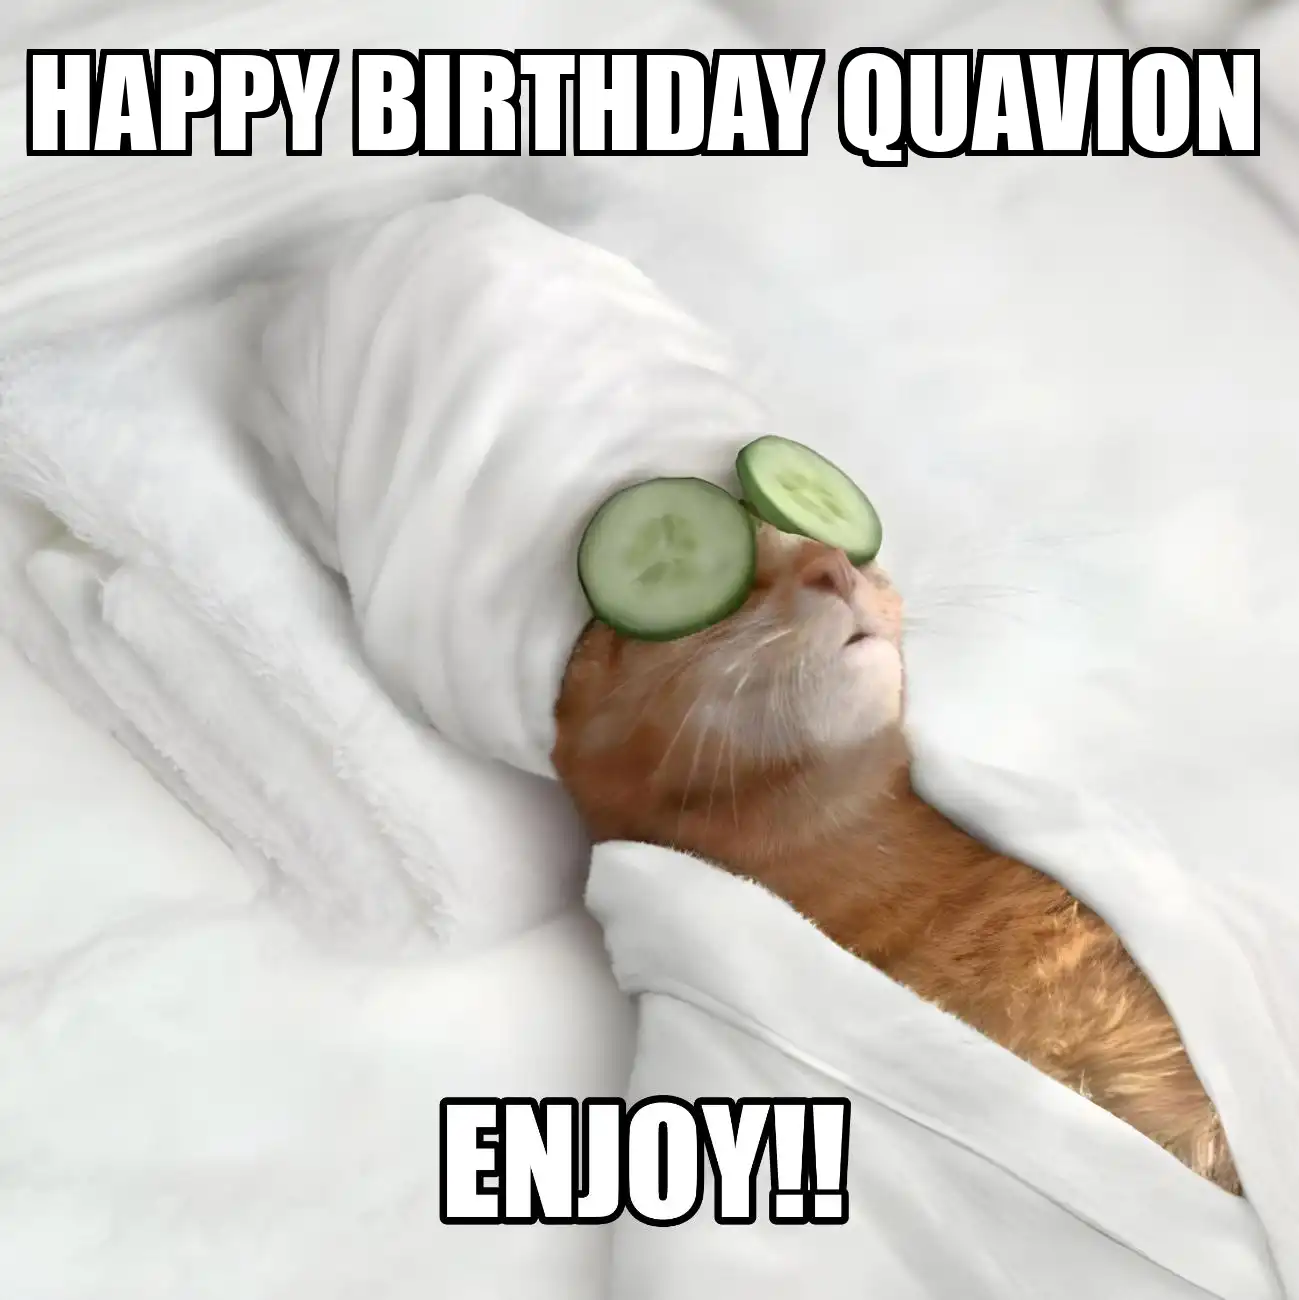 Happy Birthday Quavion Enjoy Cat Meme